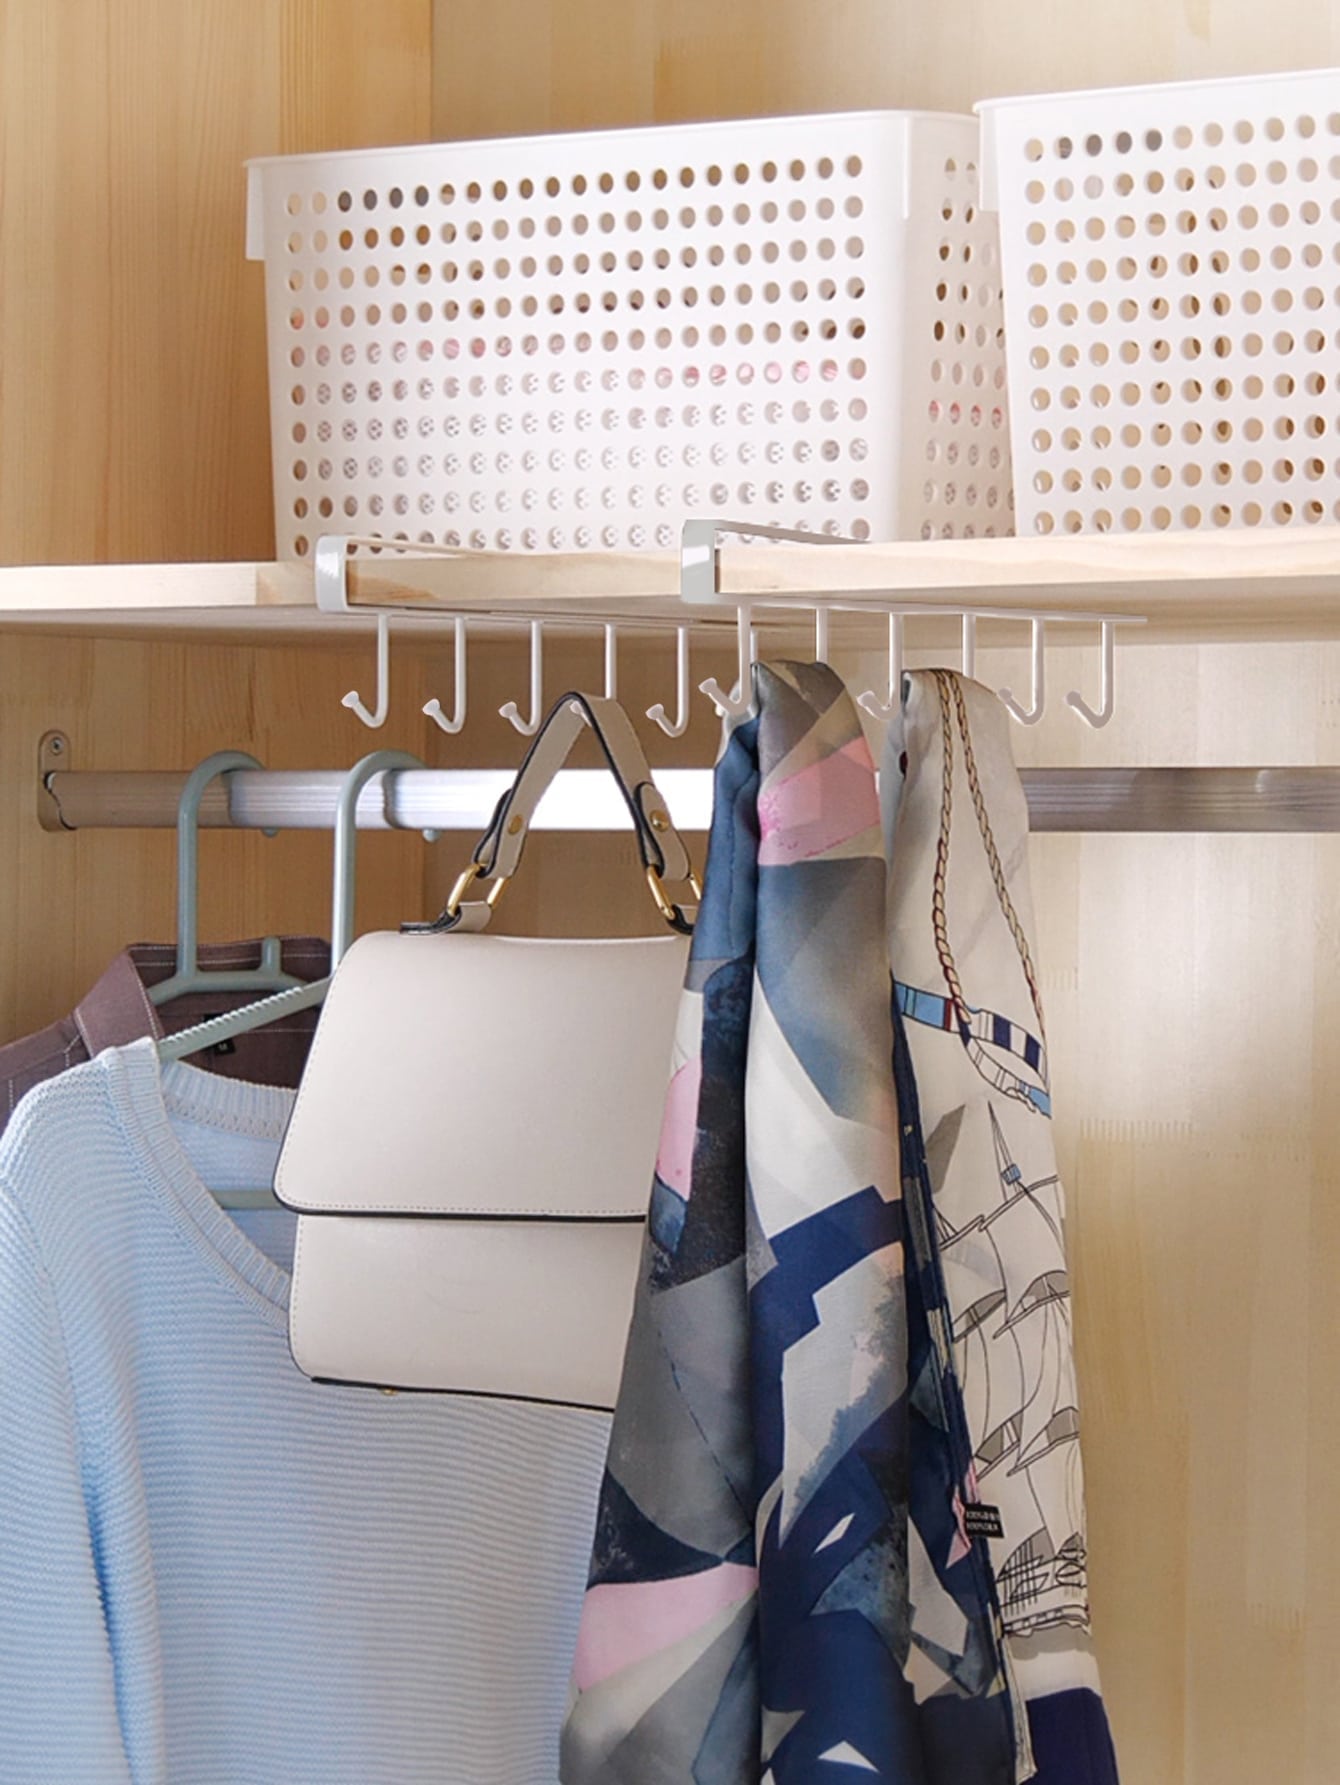 1pc 6 Hooks Storage Shelf, Wardrobe Cabinet Metal Under Shelf, Mug Cup Hanger Bathroom Kitchen Organizer Hanging Rack Holder